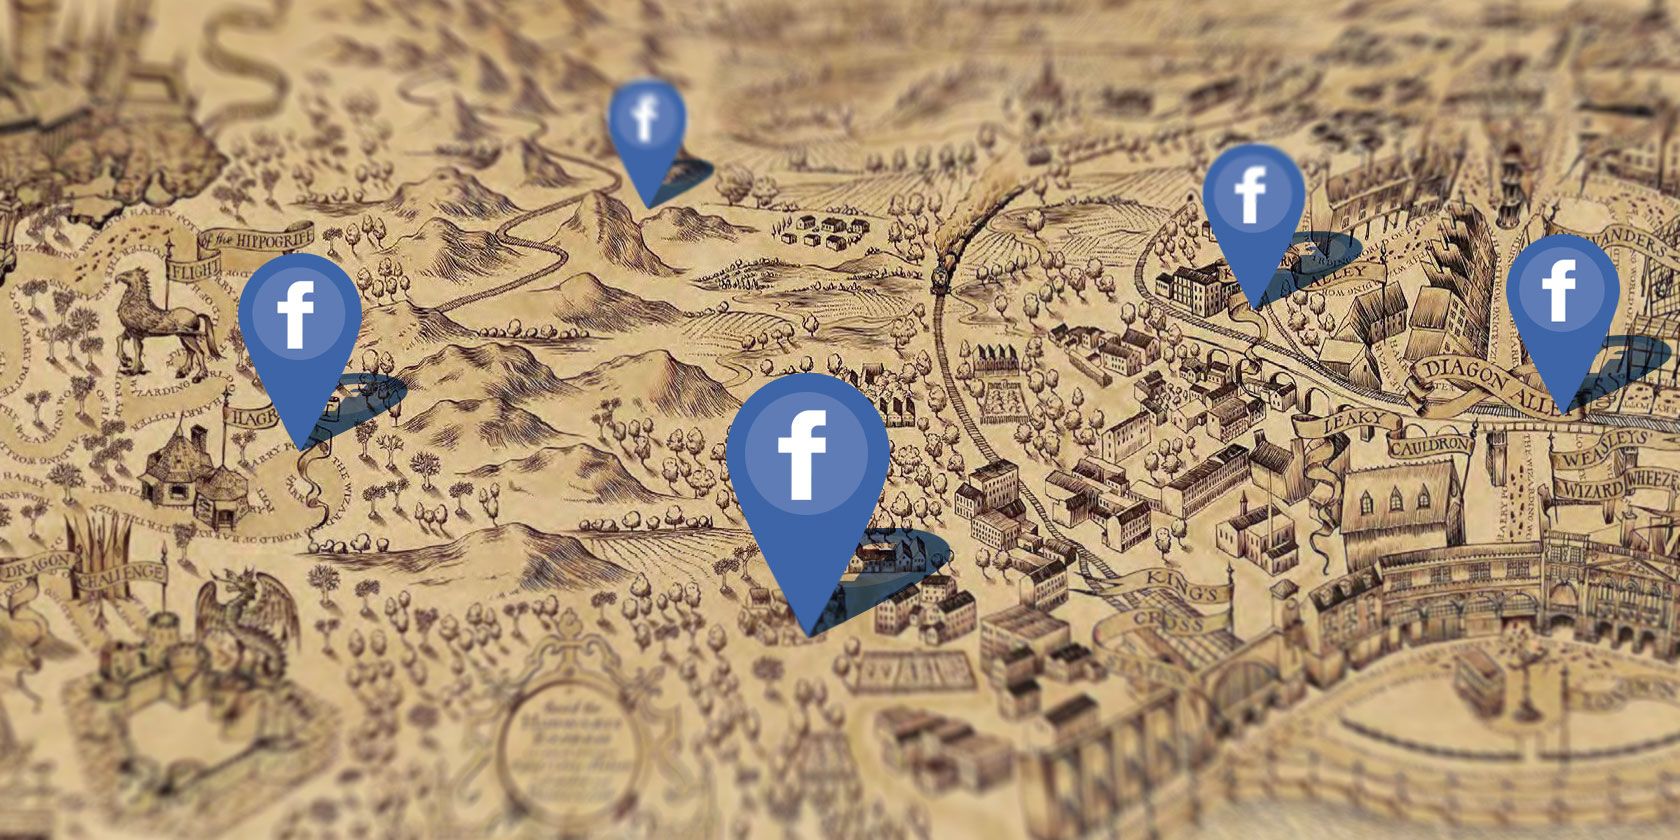 facebook friends mapper chrome extension